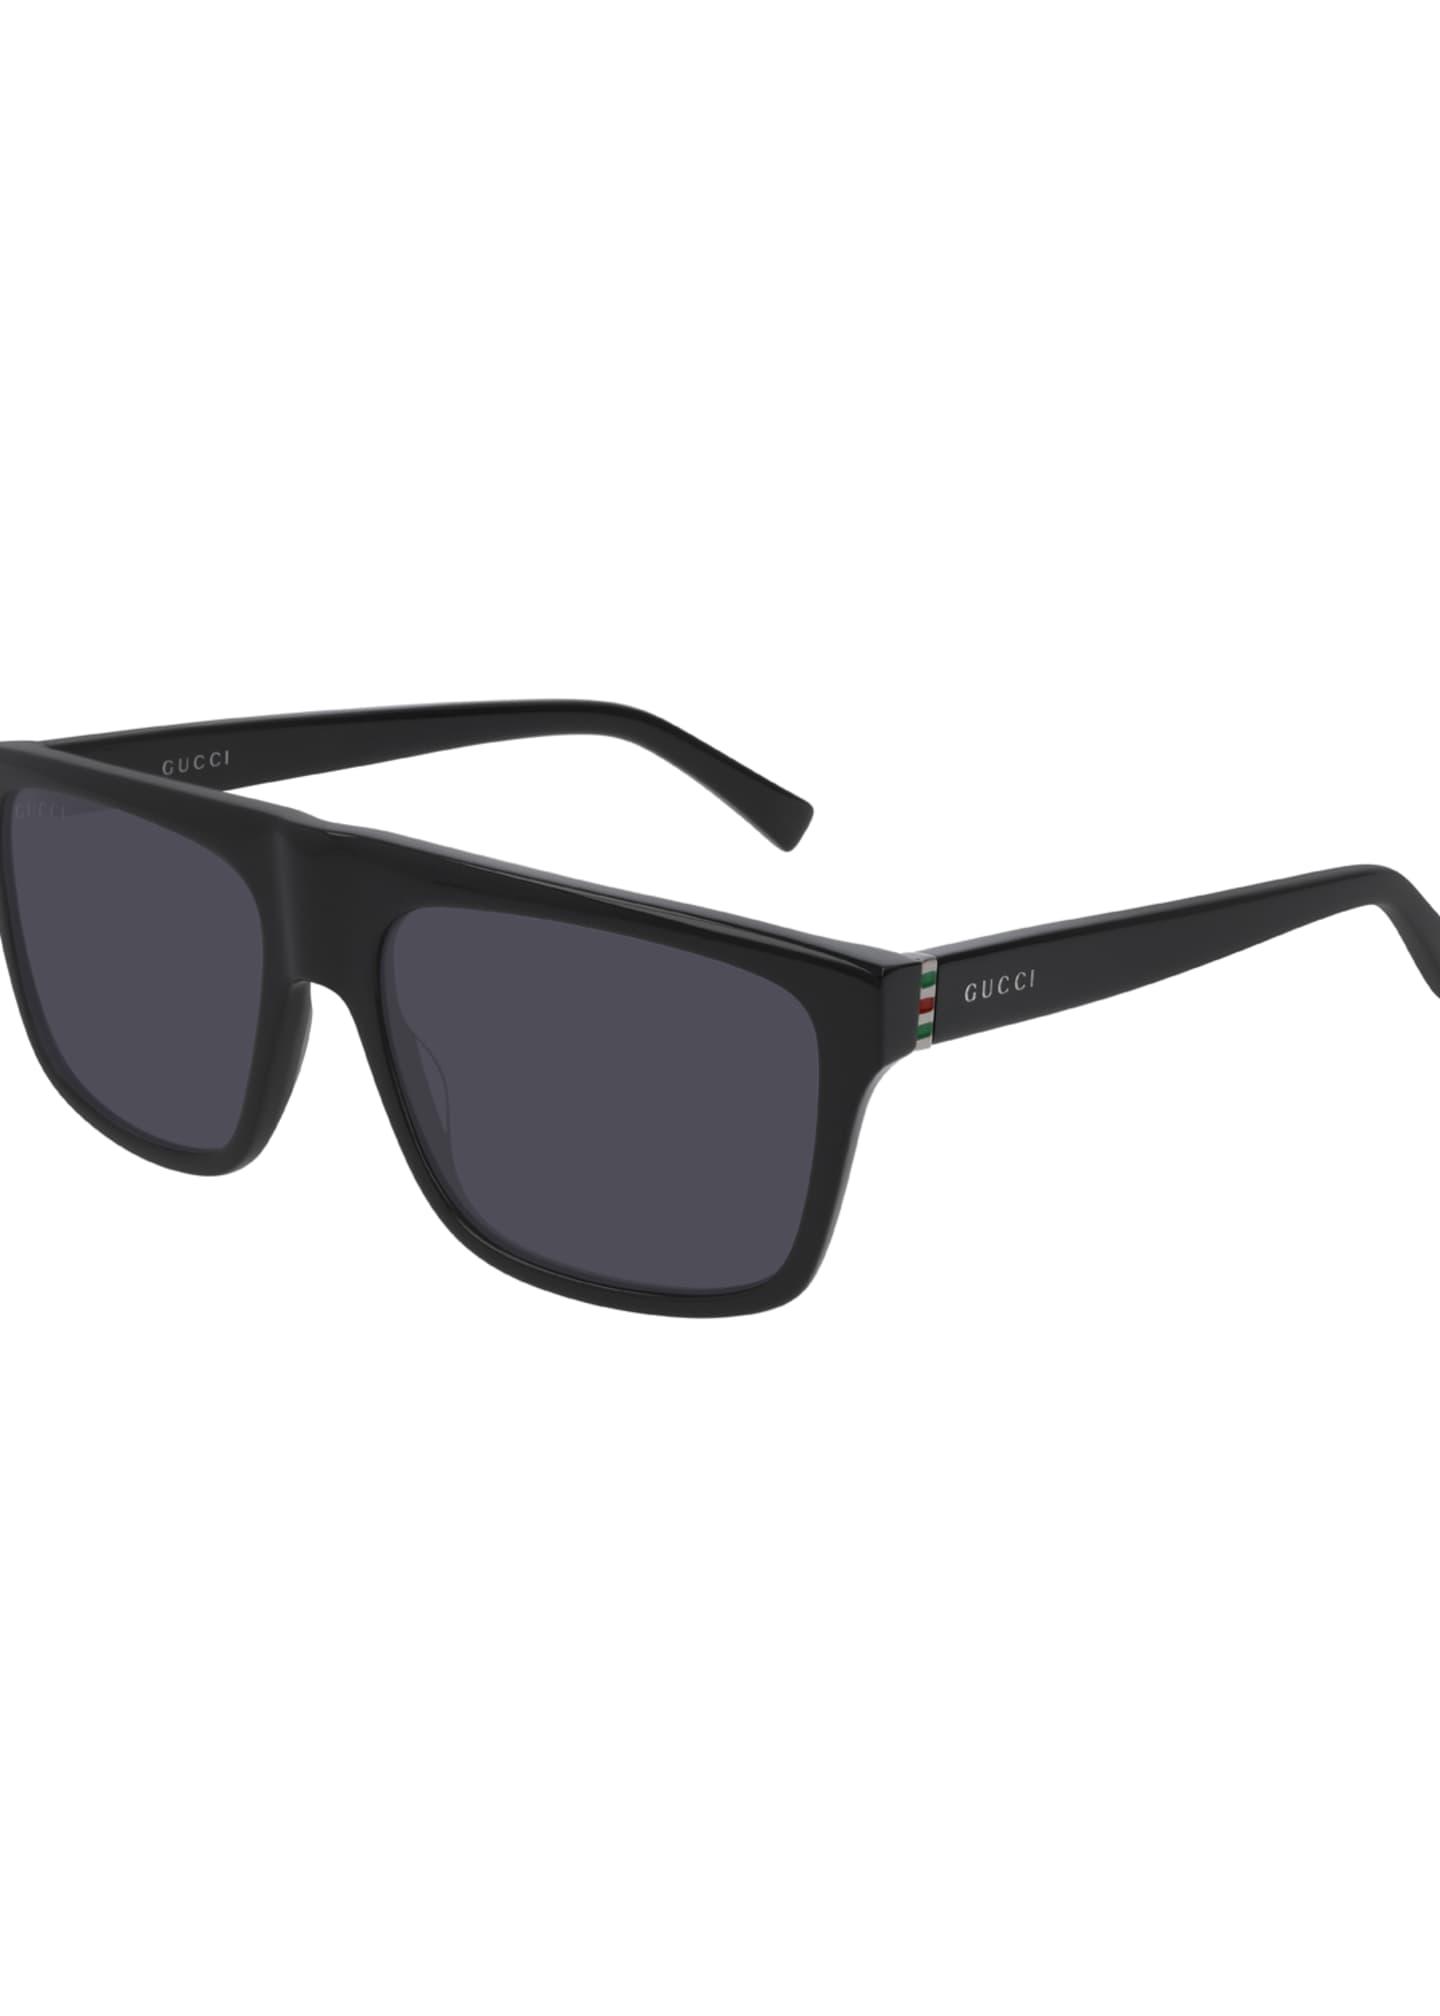 gucci sunglasses flat top